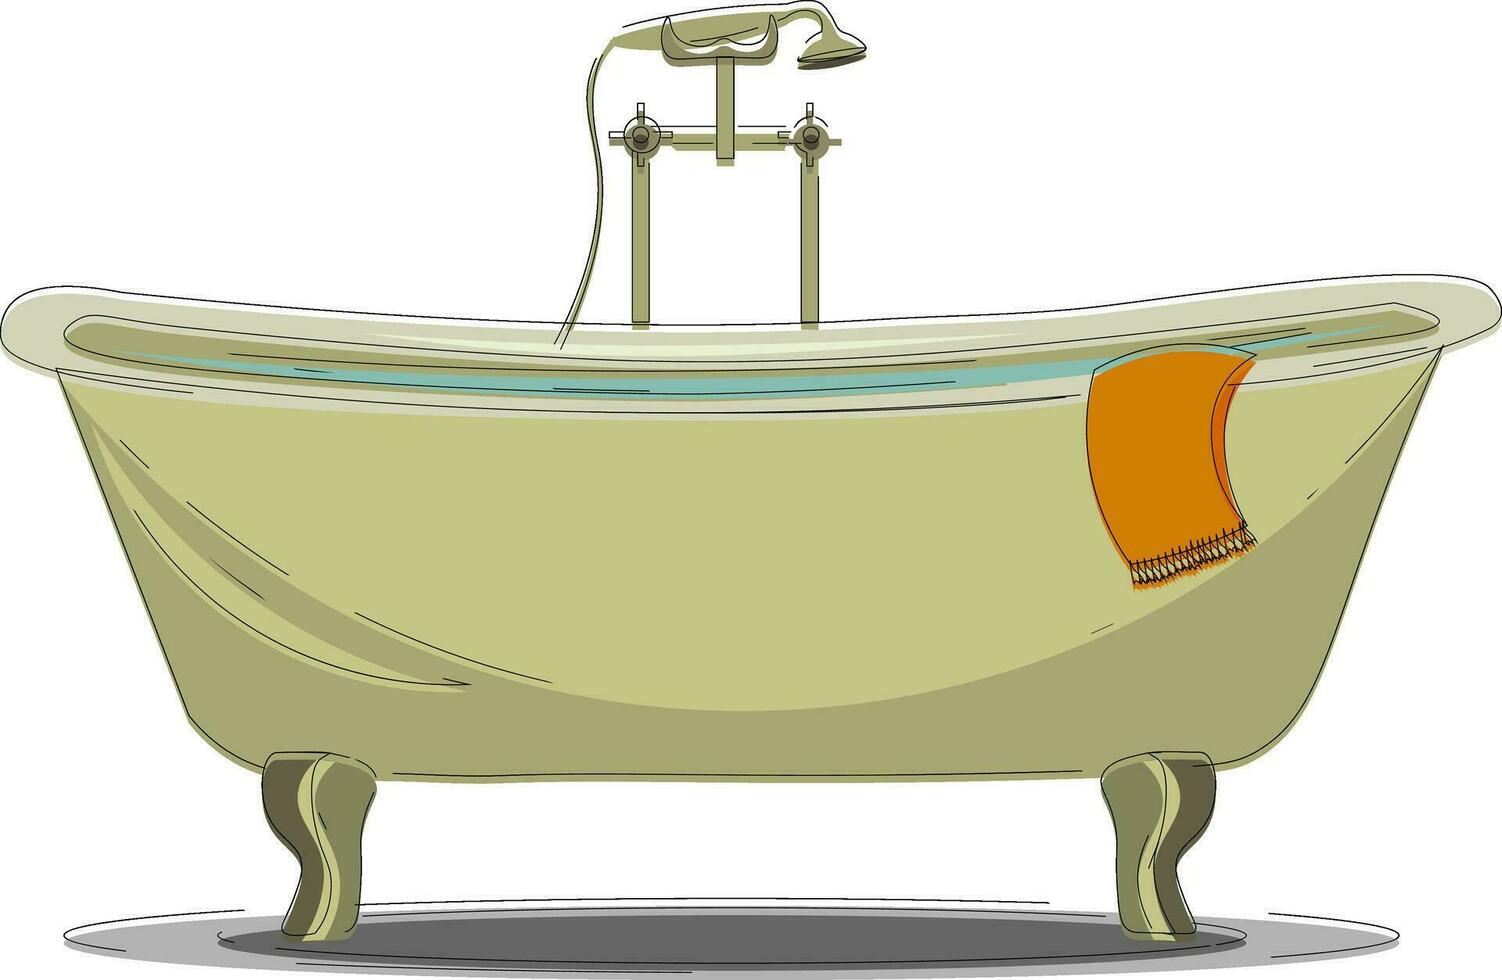 comfortable bathtub vector or color illustration